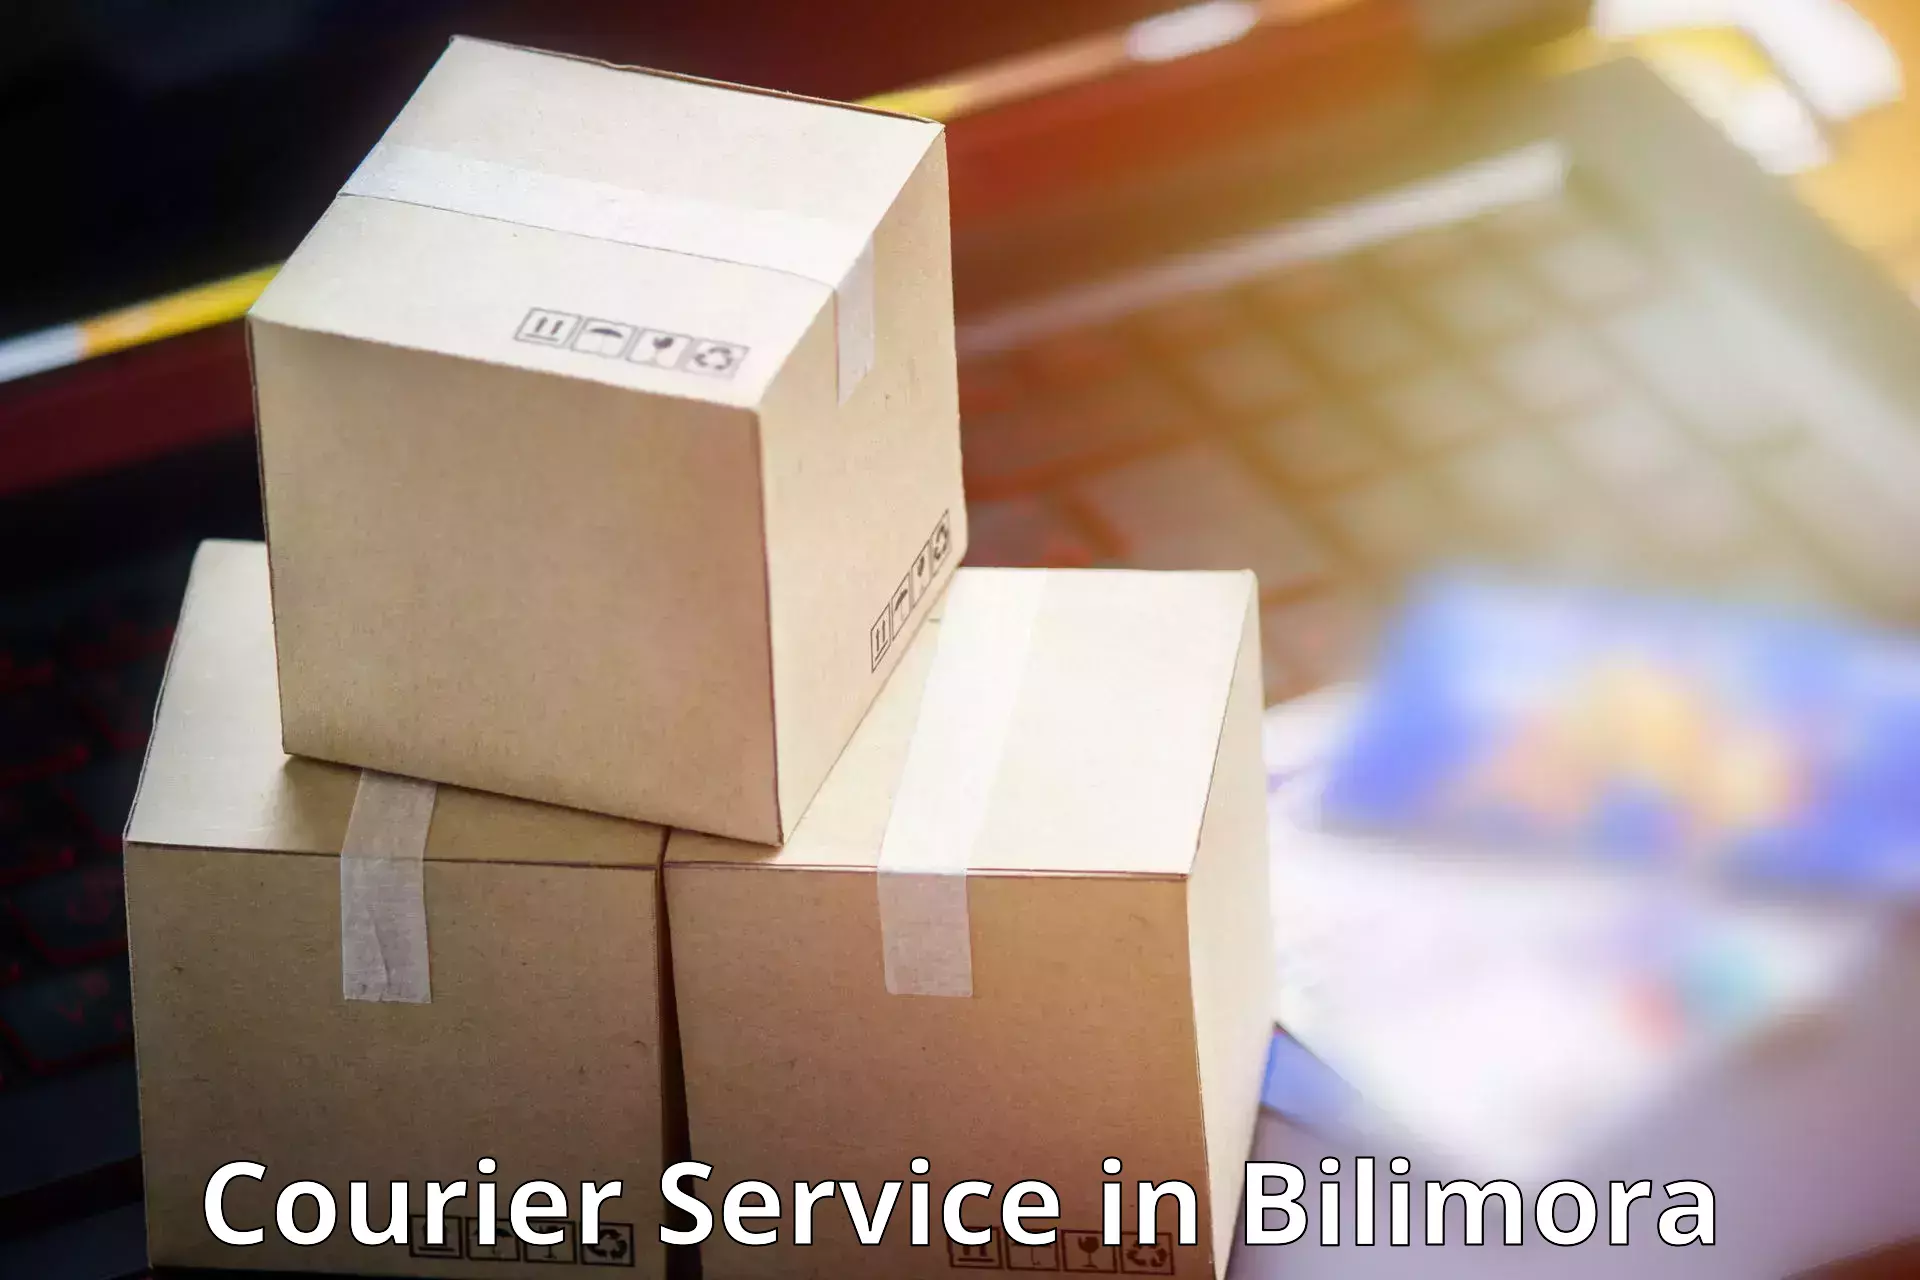 Express logistics providers in Bilimora